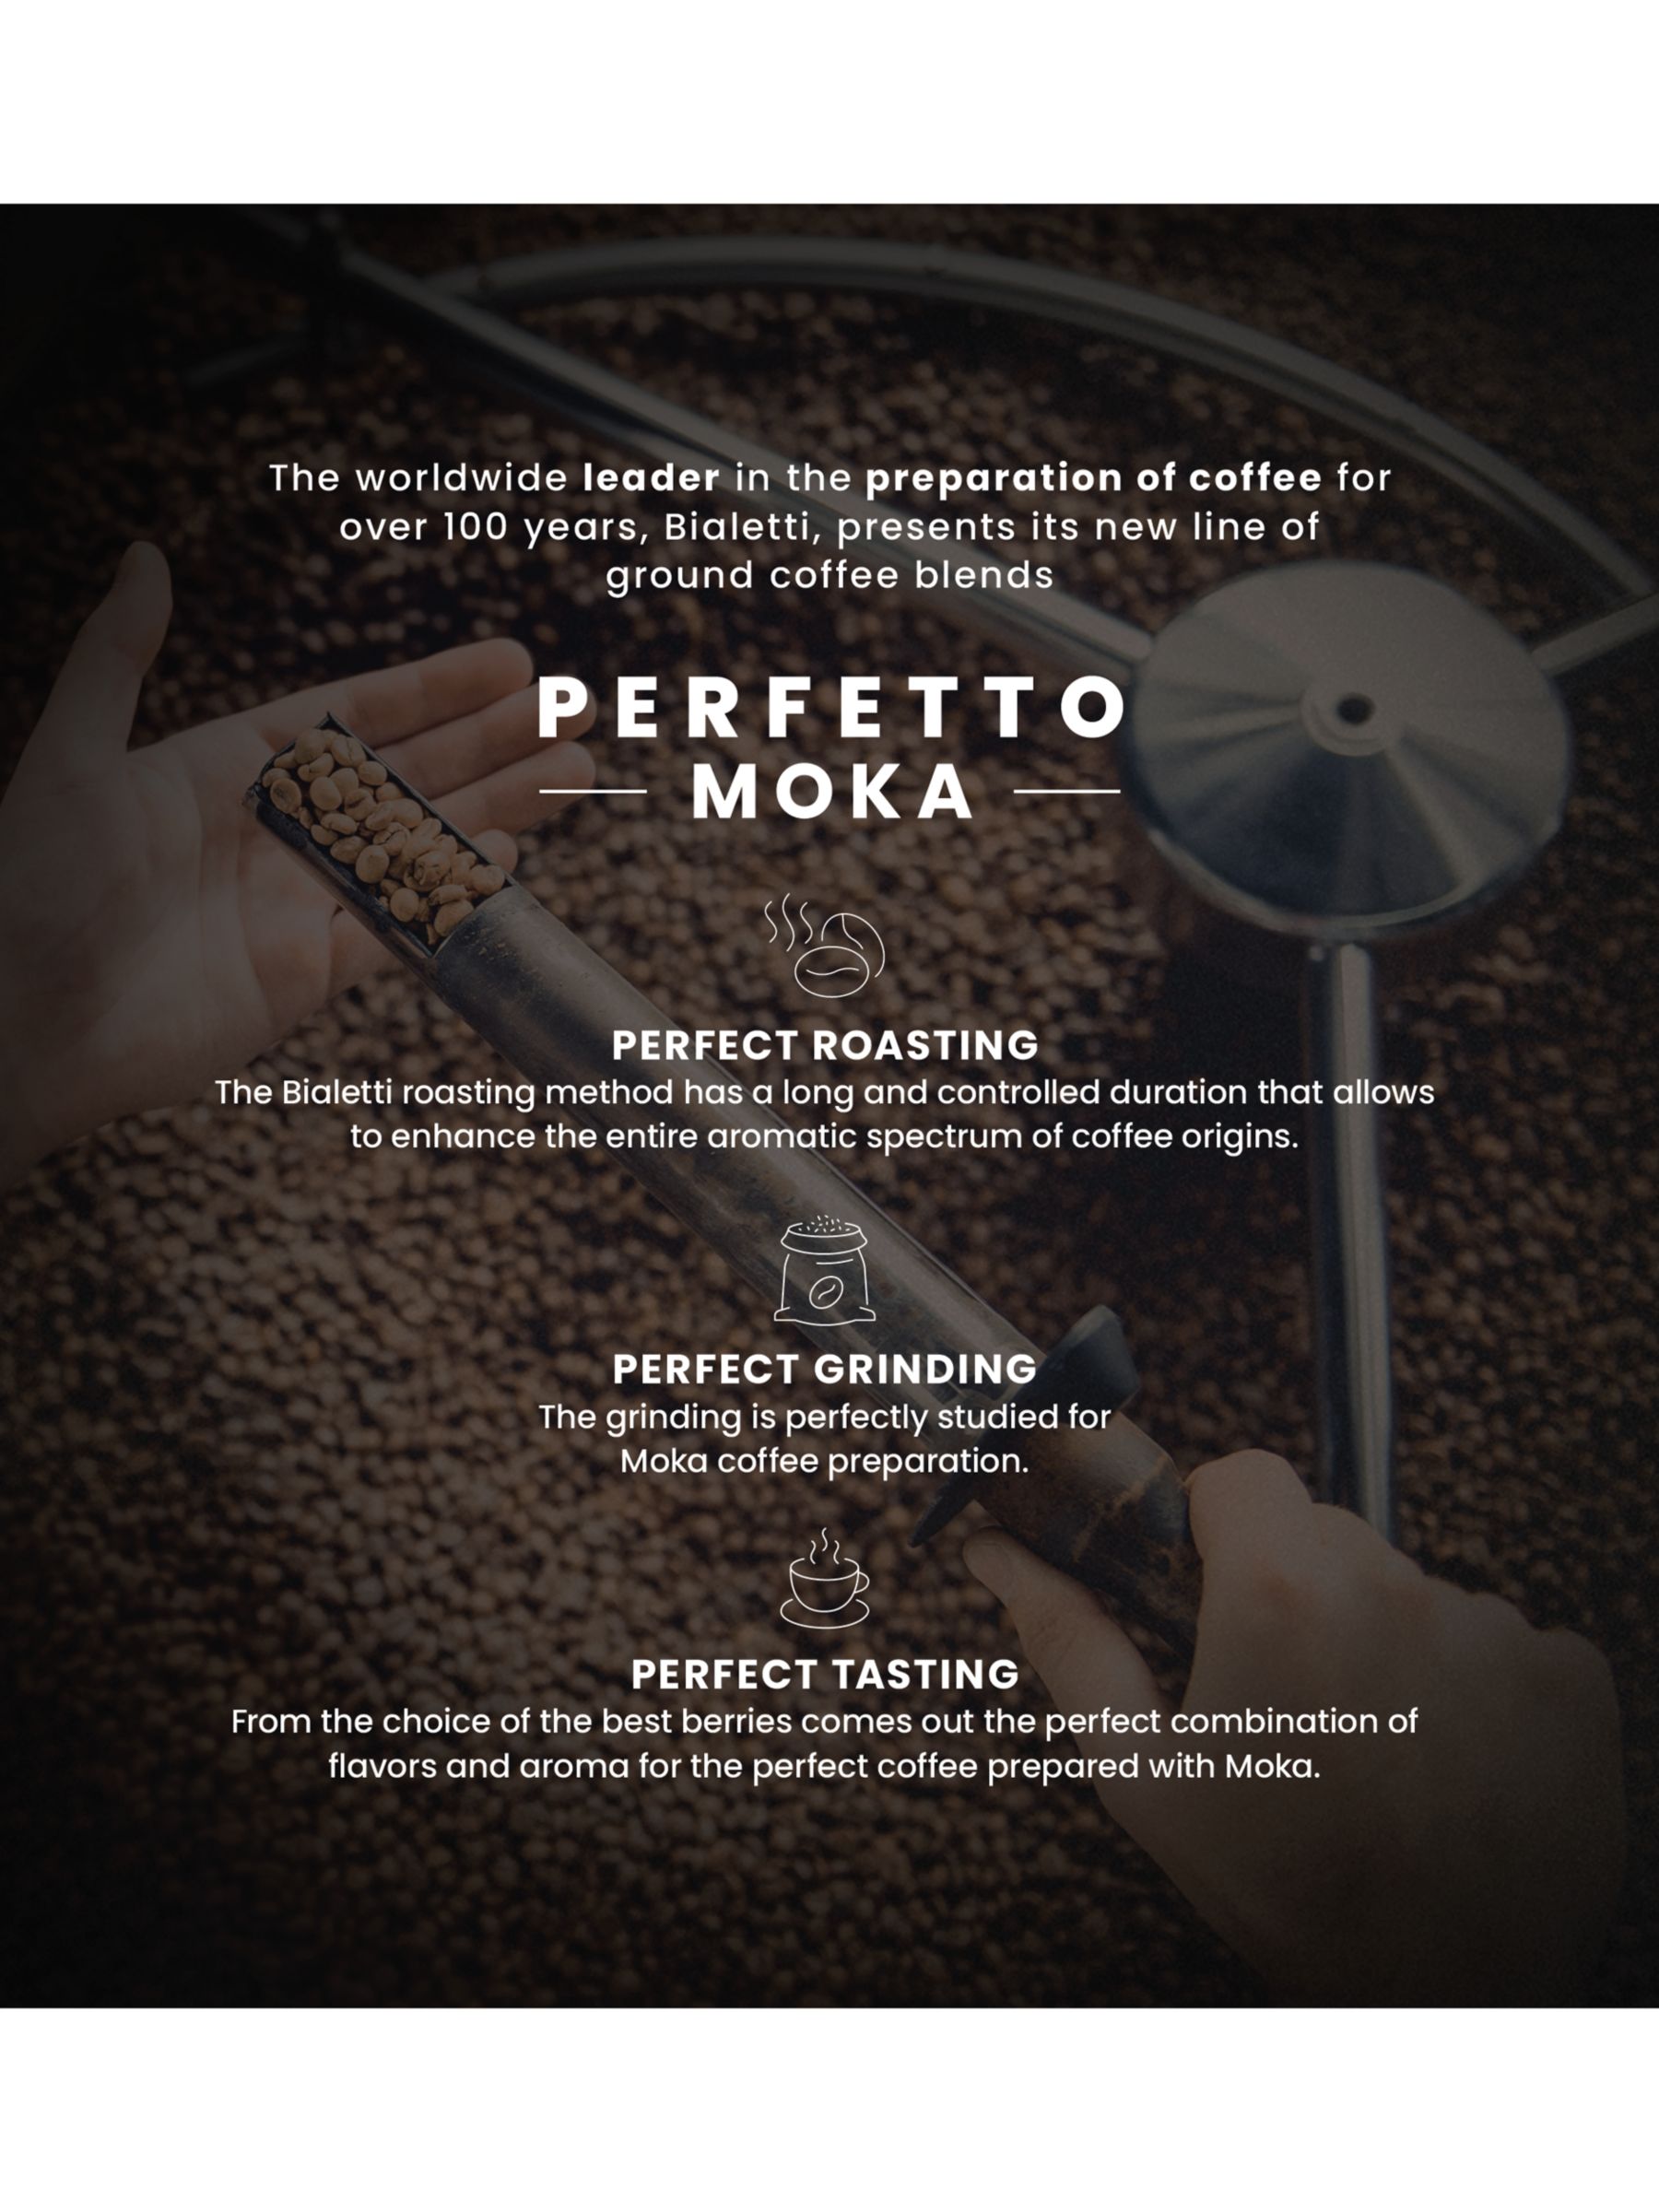 Bialetti Perfetto Moka Intenso Ground Coffee 250 g - Crema